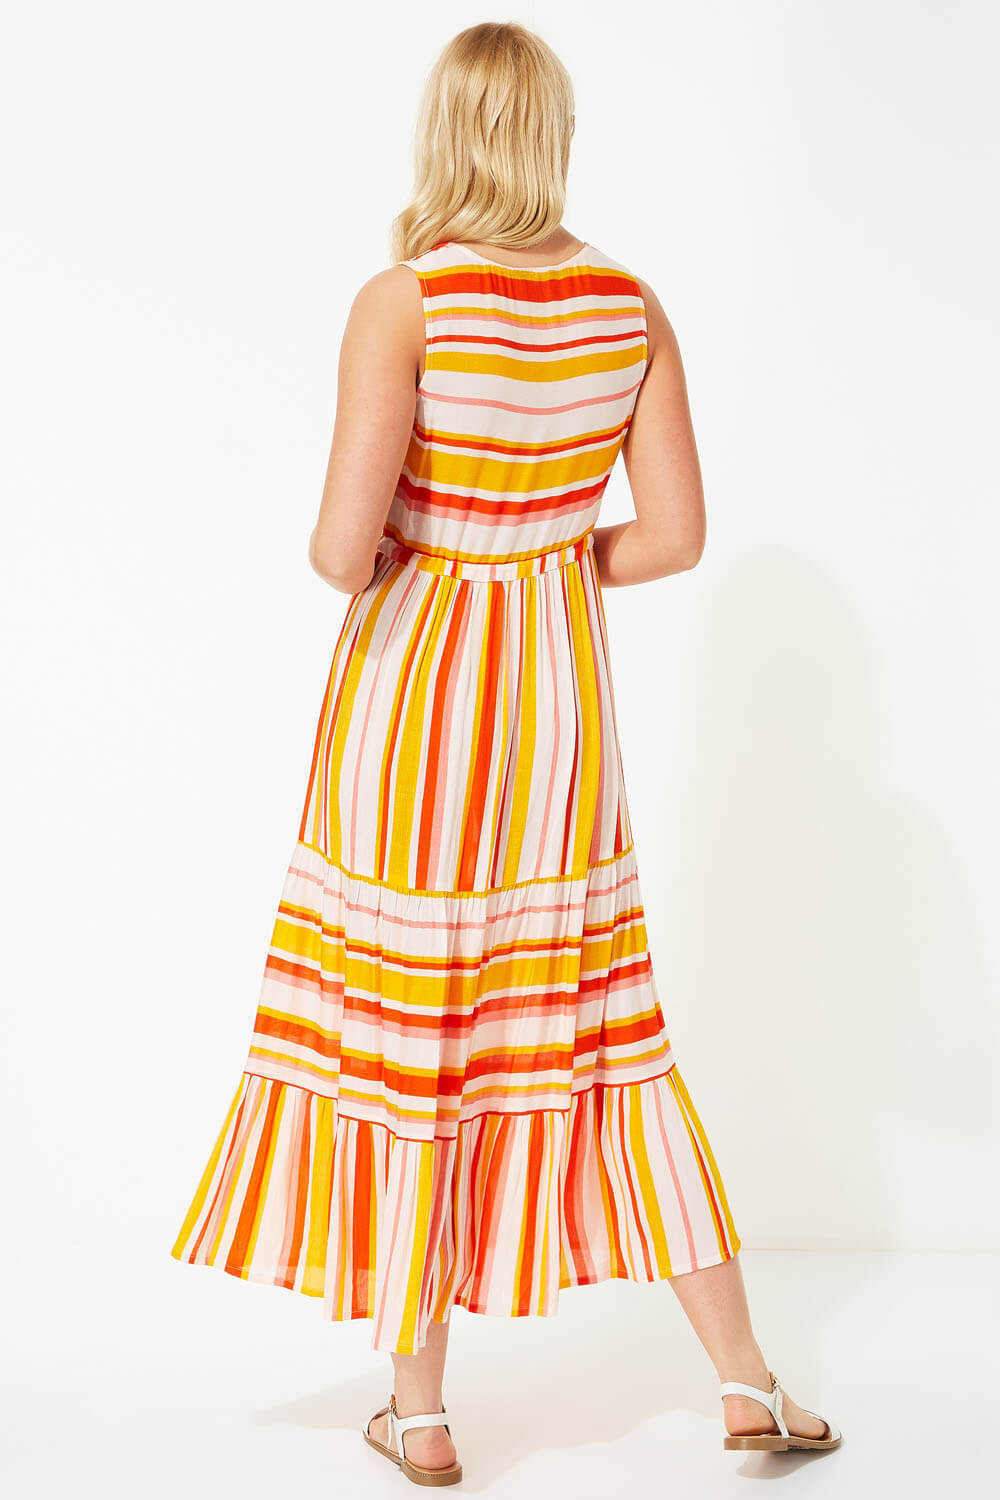 ORANGE Stripe Tiered Maxi Dress, Image 2 of 4